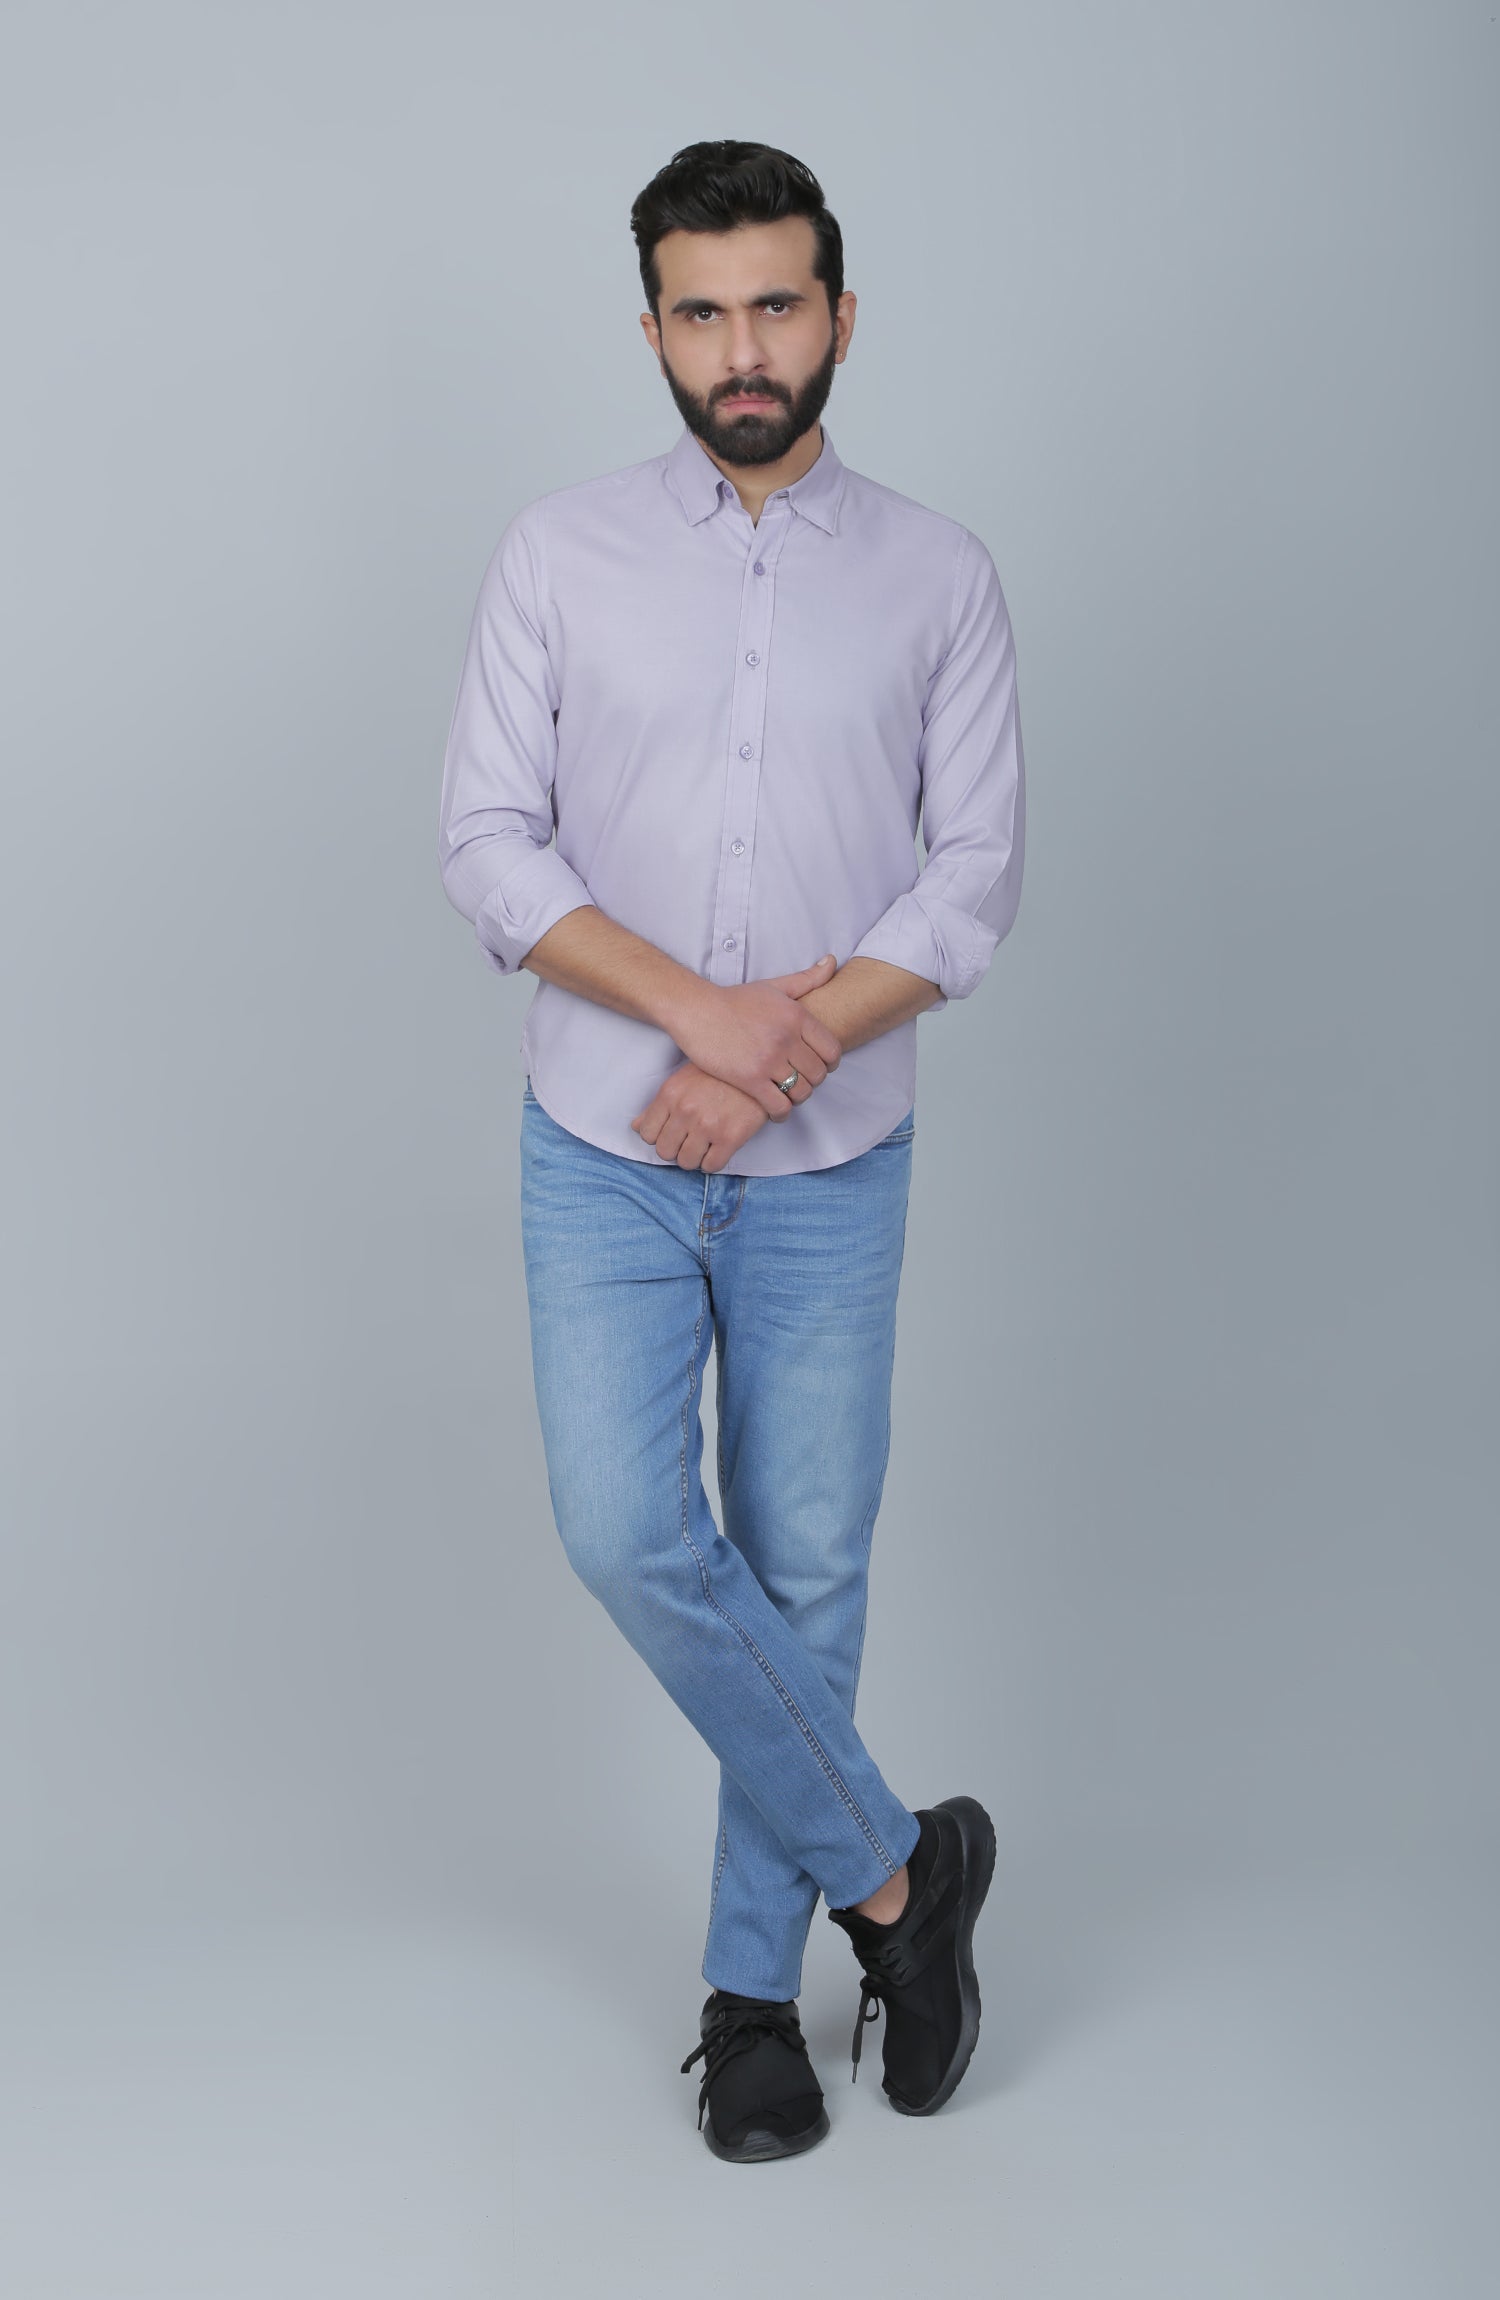 Man in purple dress shirt and blue denim jeans sitting photo – Free  Chandigarh Image on Unsplash